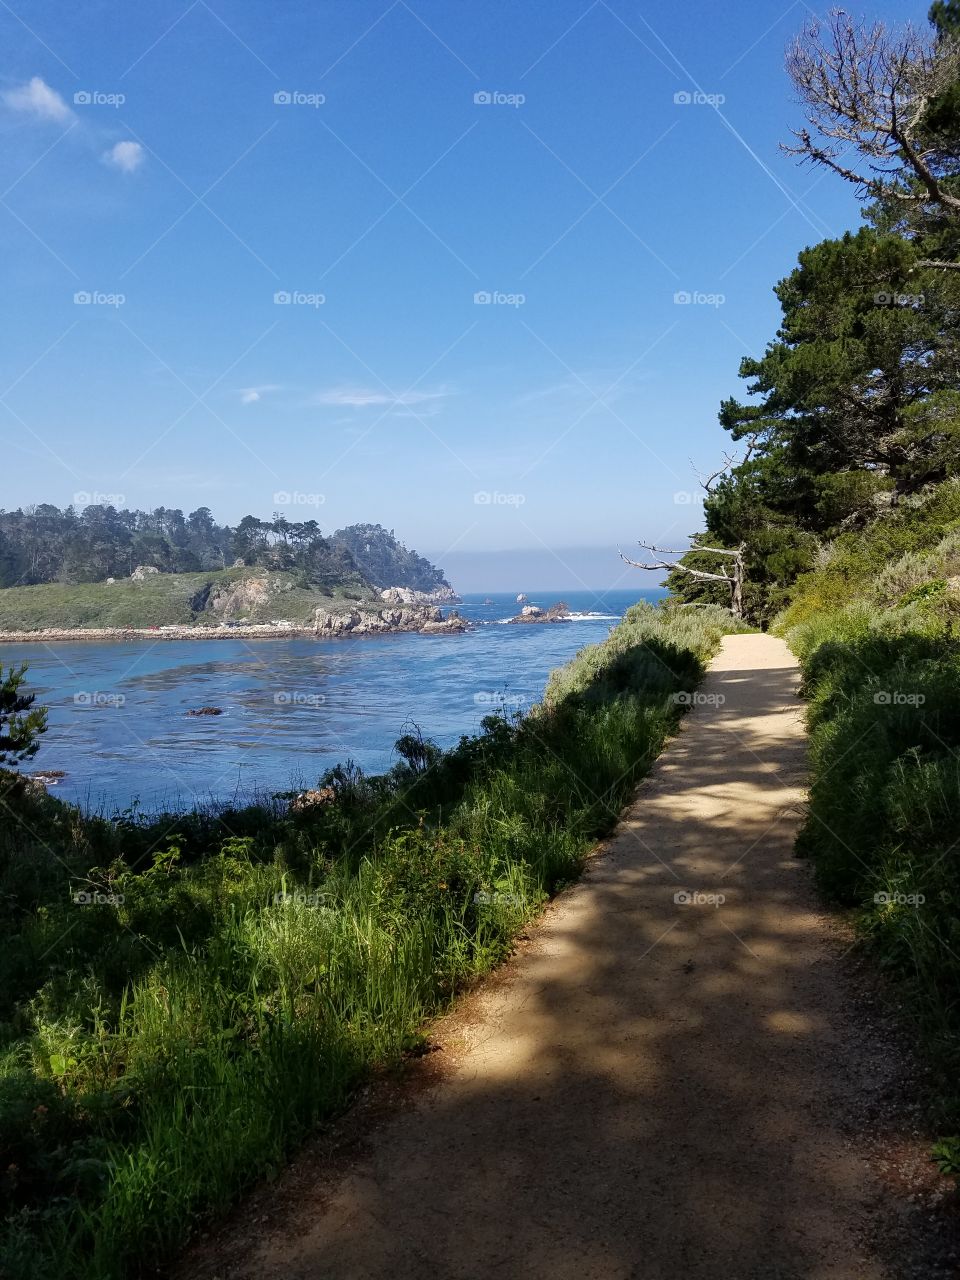 Point Lobos.